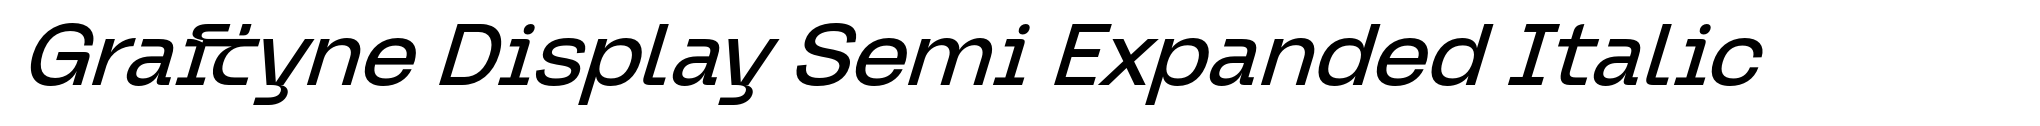 Graftyne Display Semi Expanded Italic image